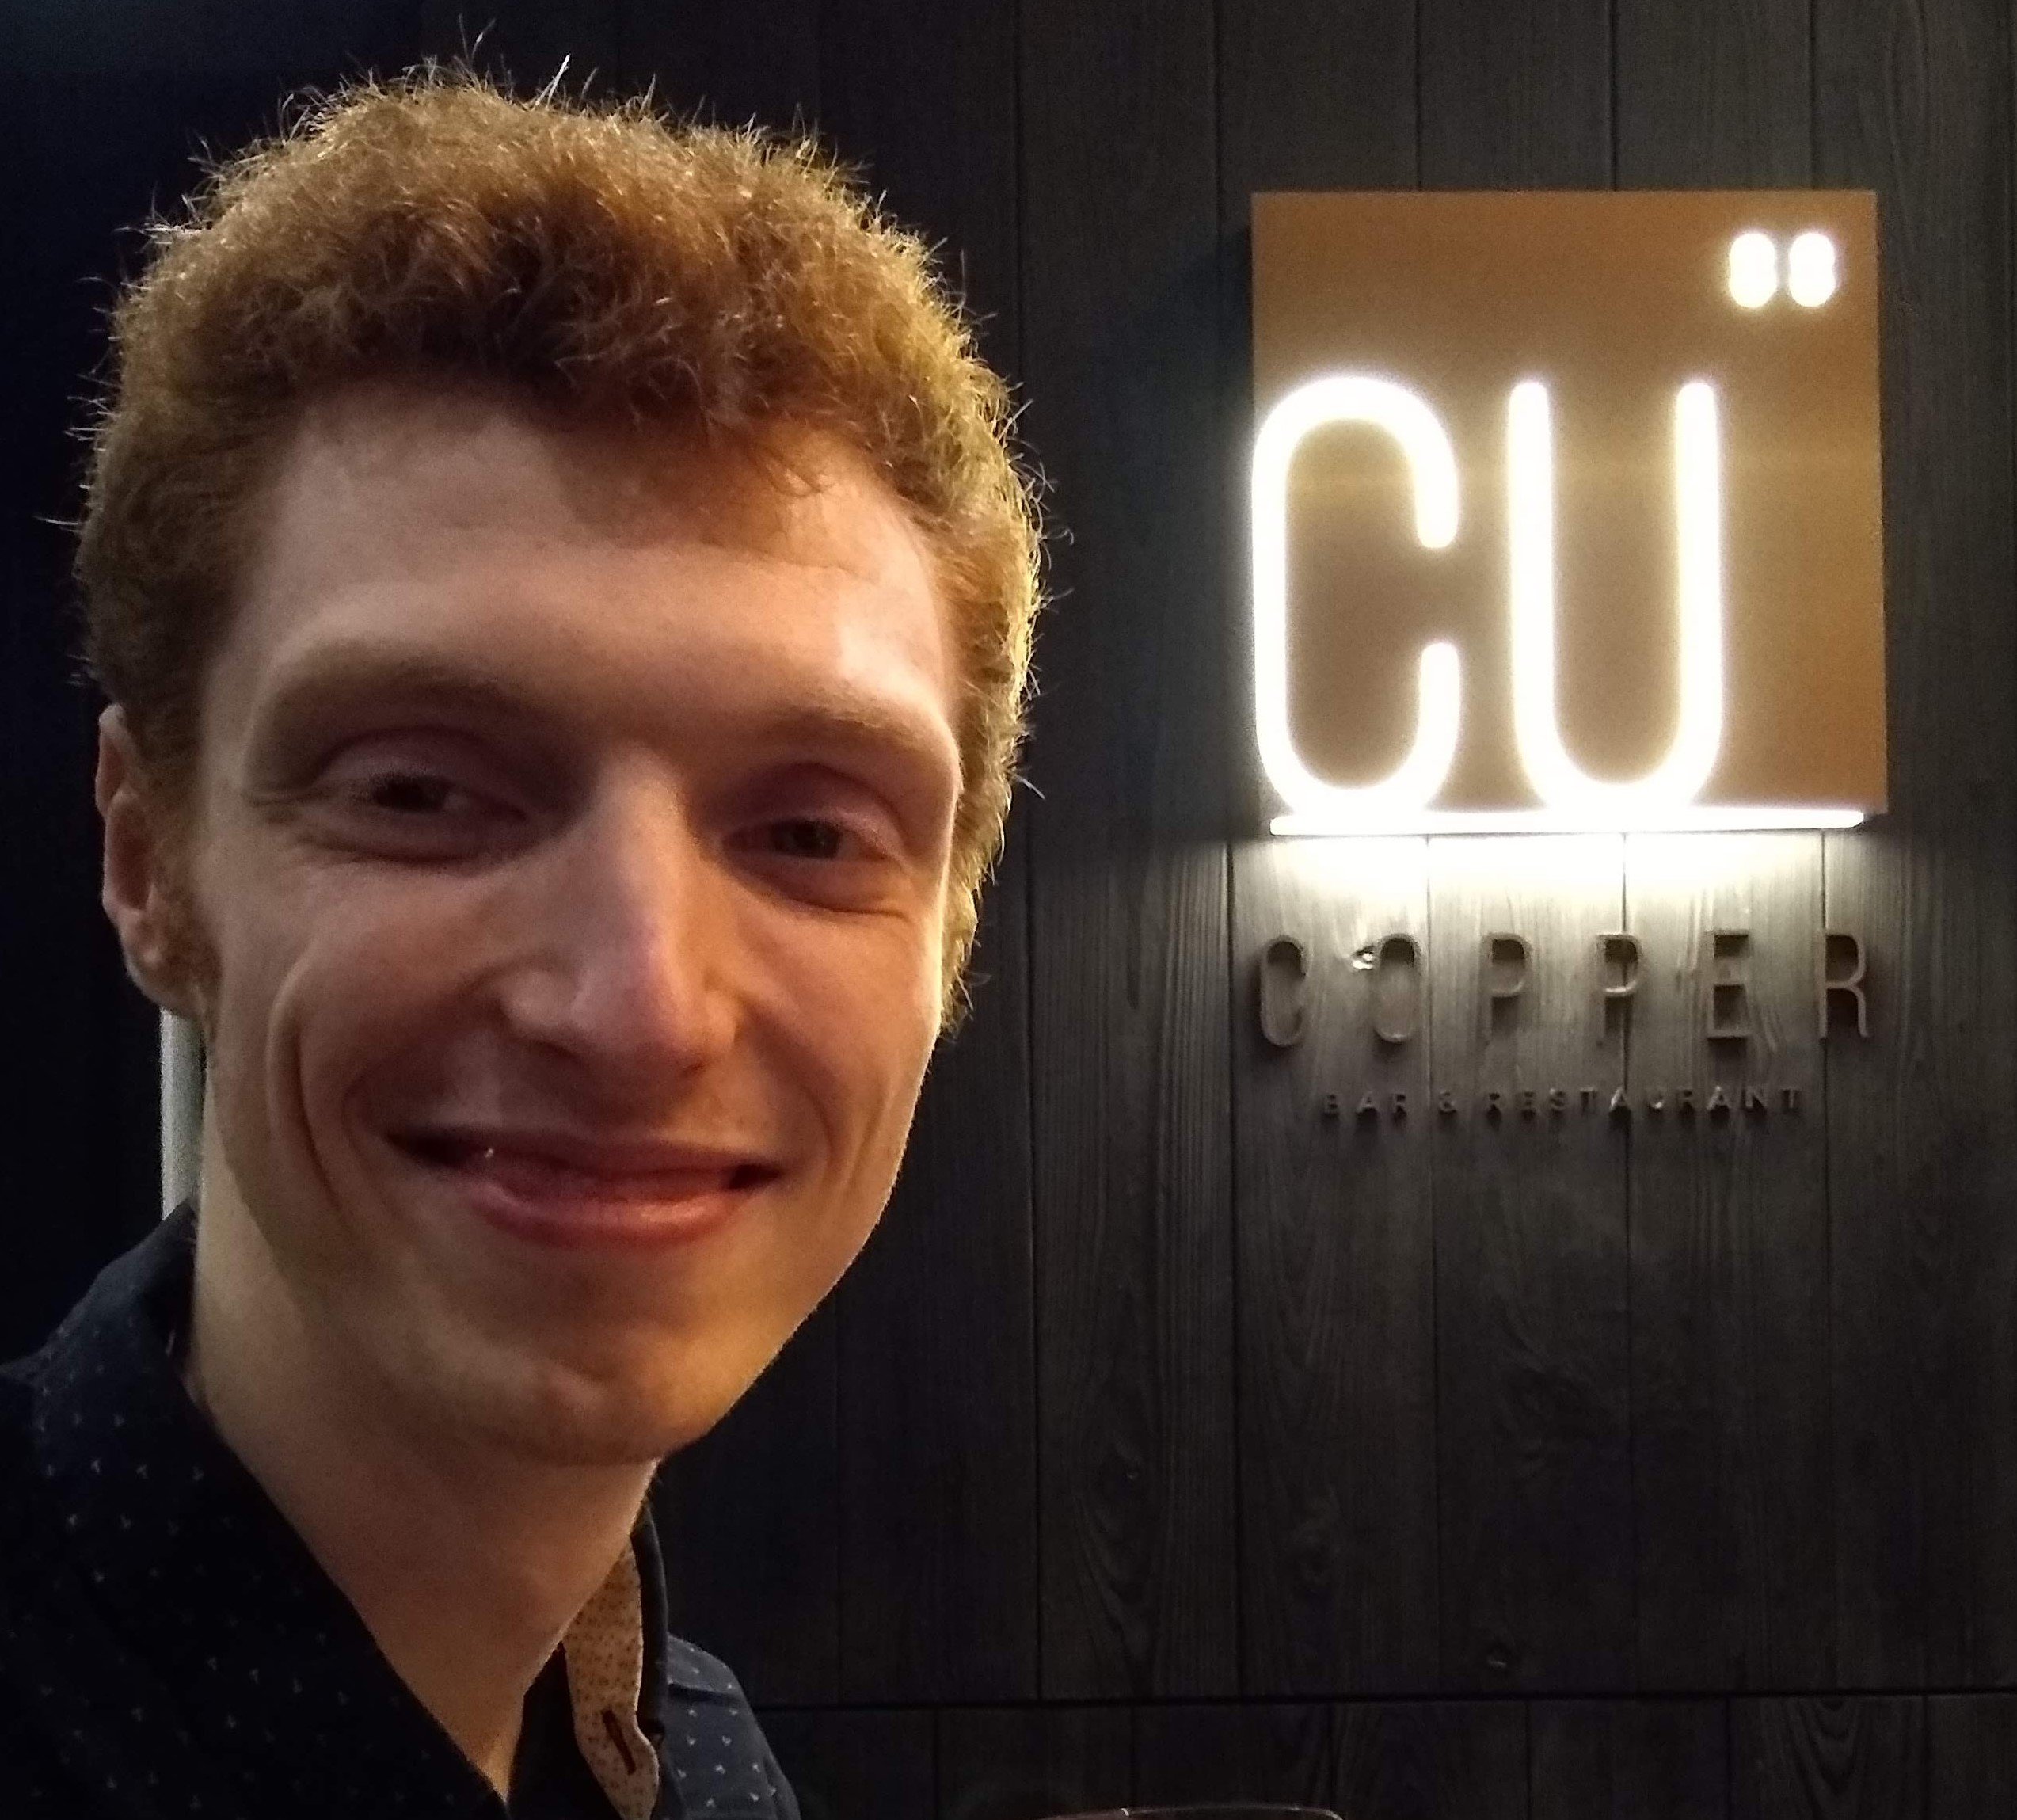 Evan finds a copper establishment